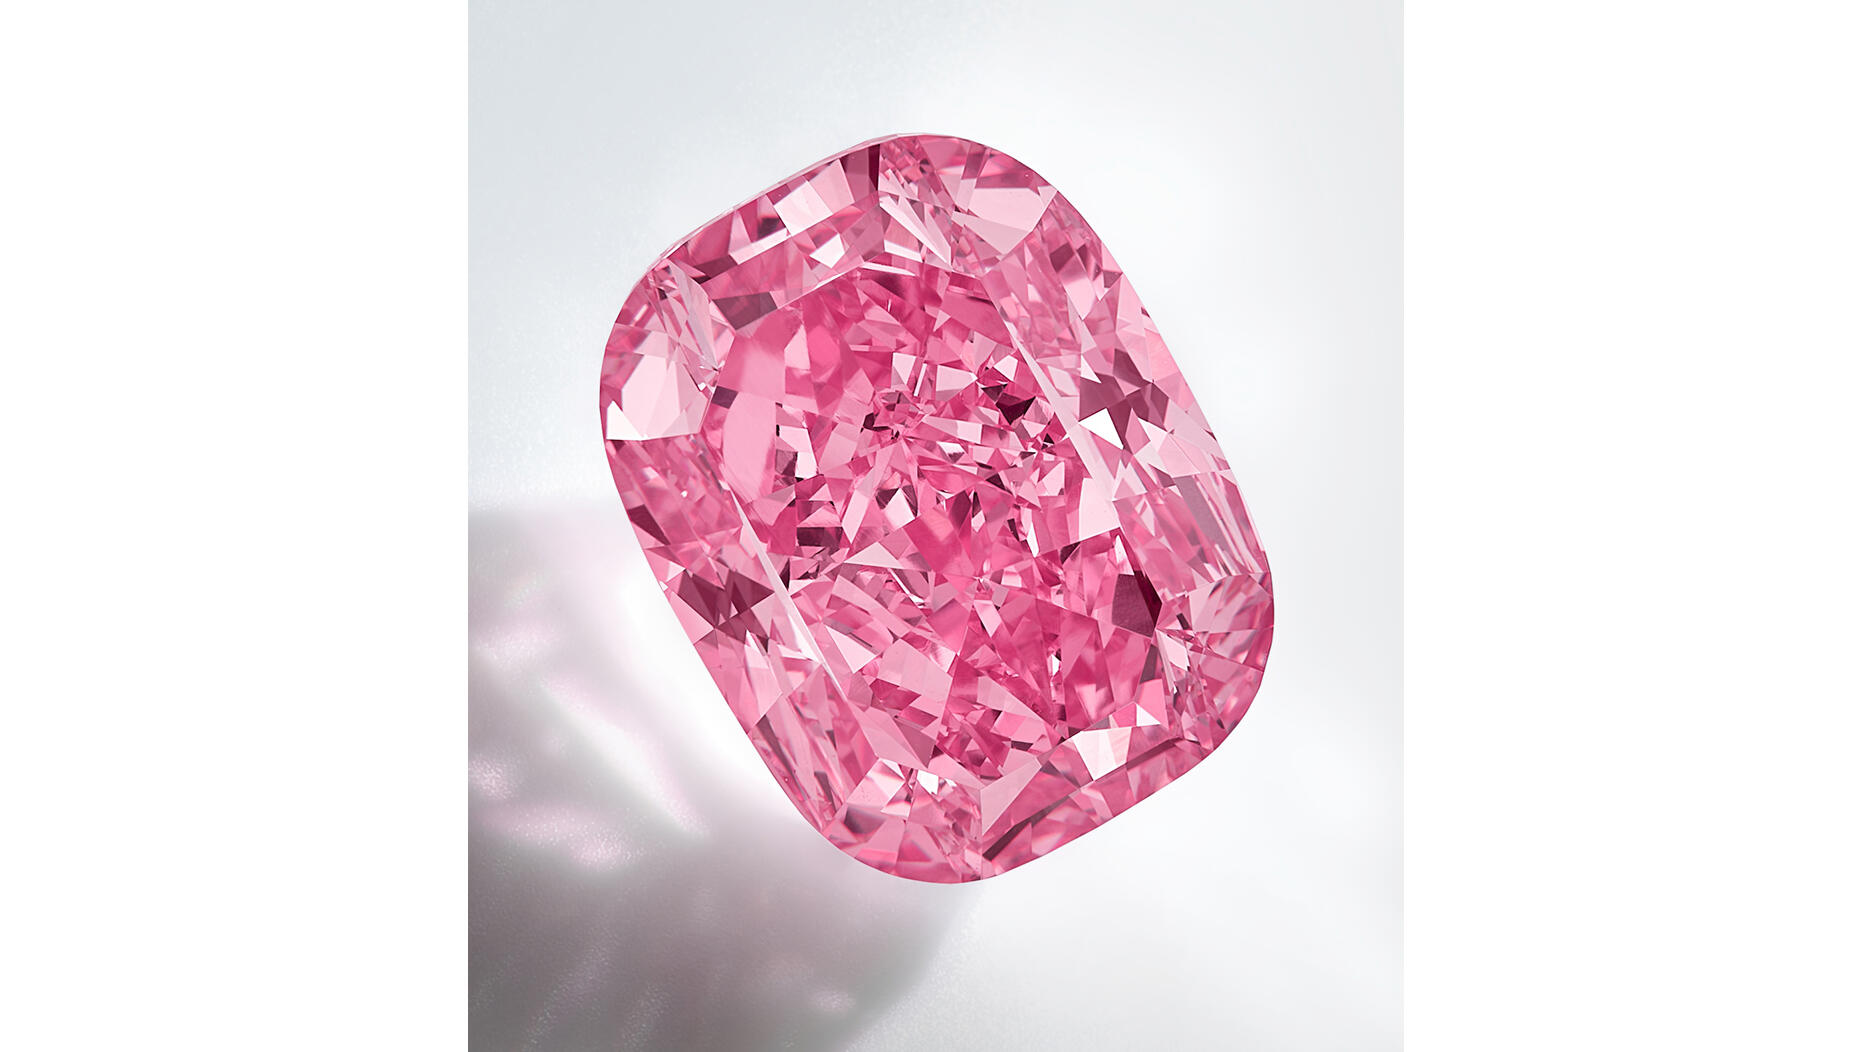 The Eternal Pink diamond